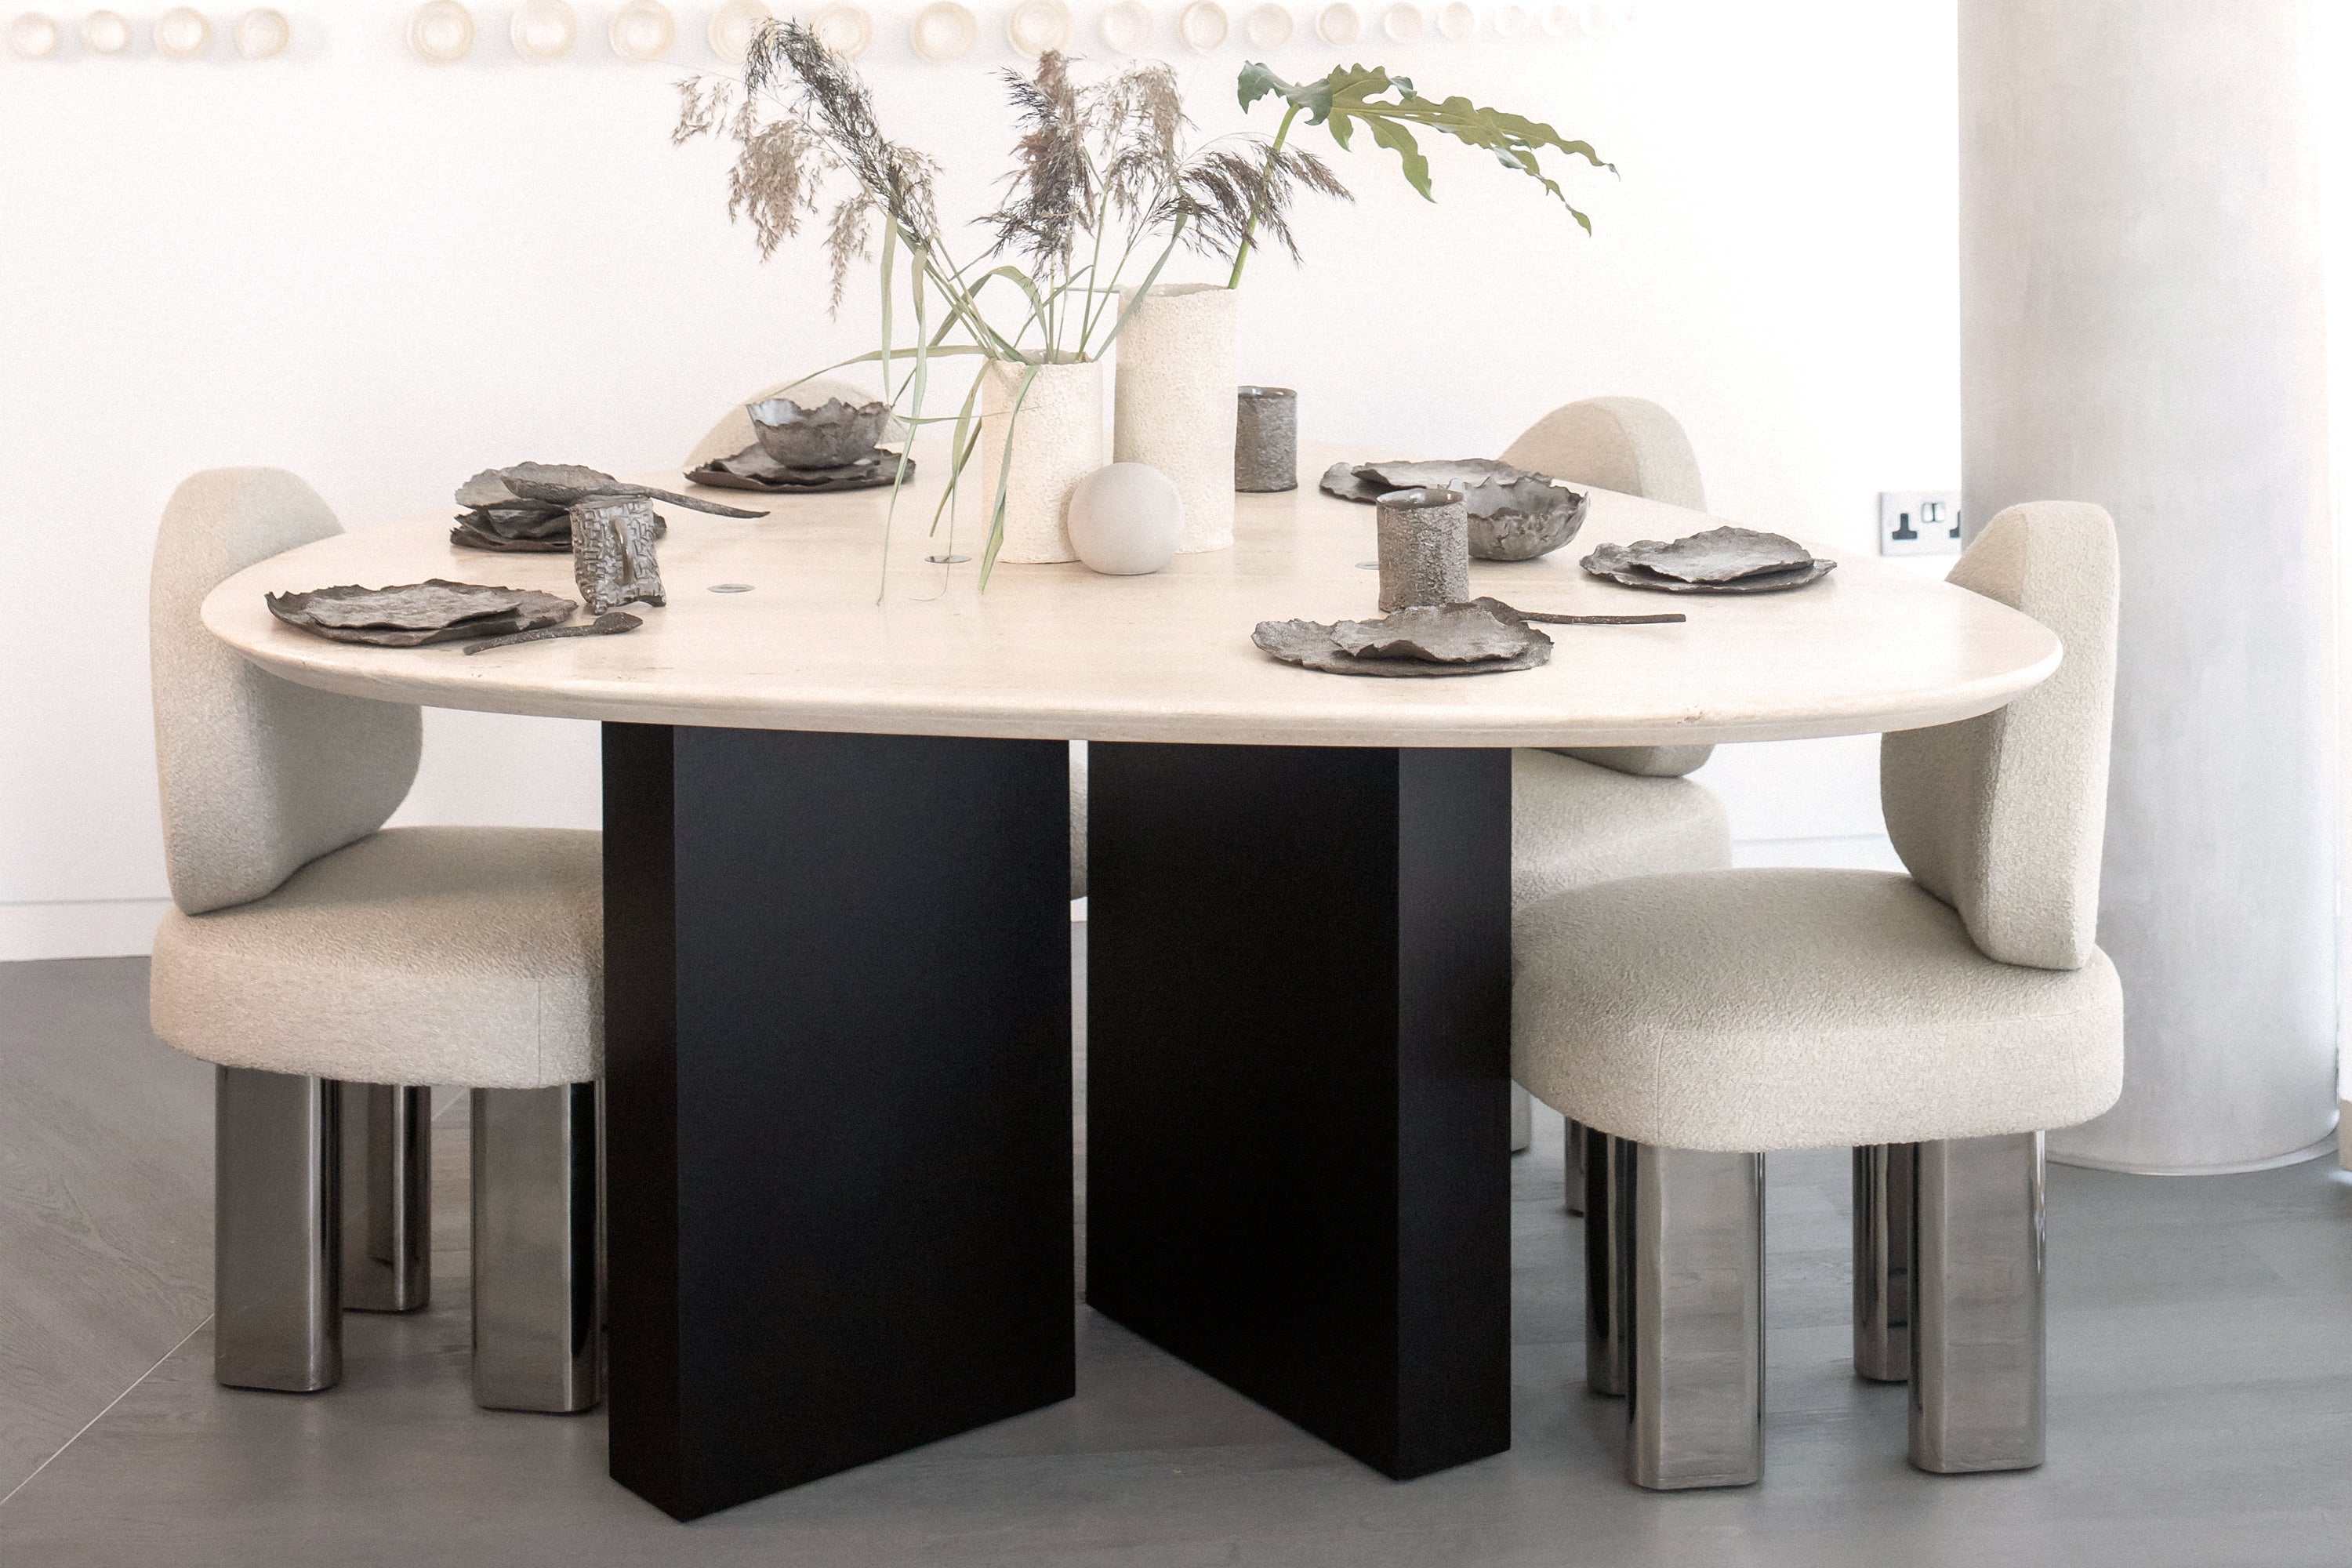 Designer Dining Room Furniture Ideas for Elegant Entertaining